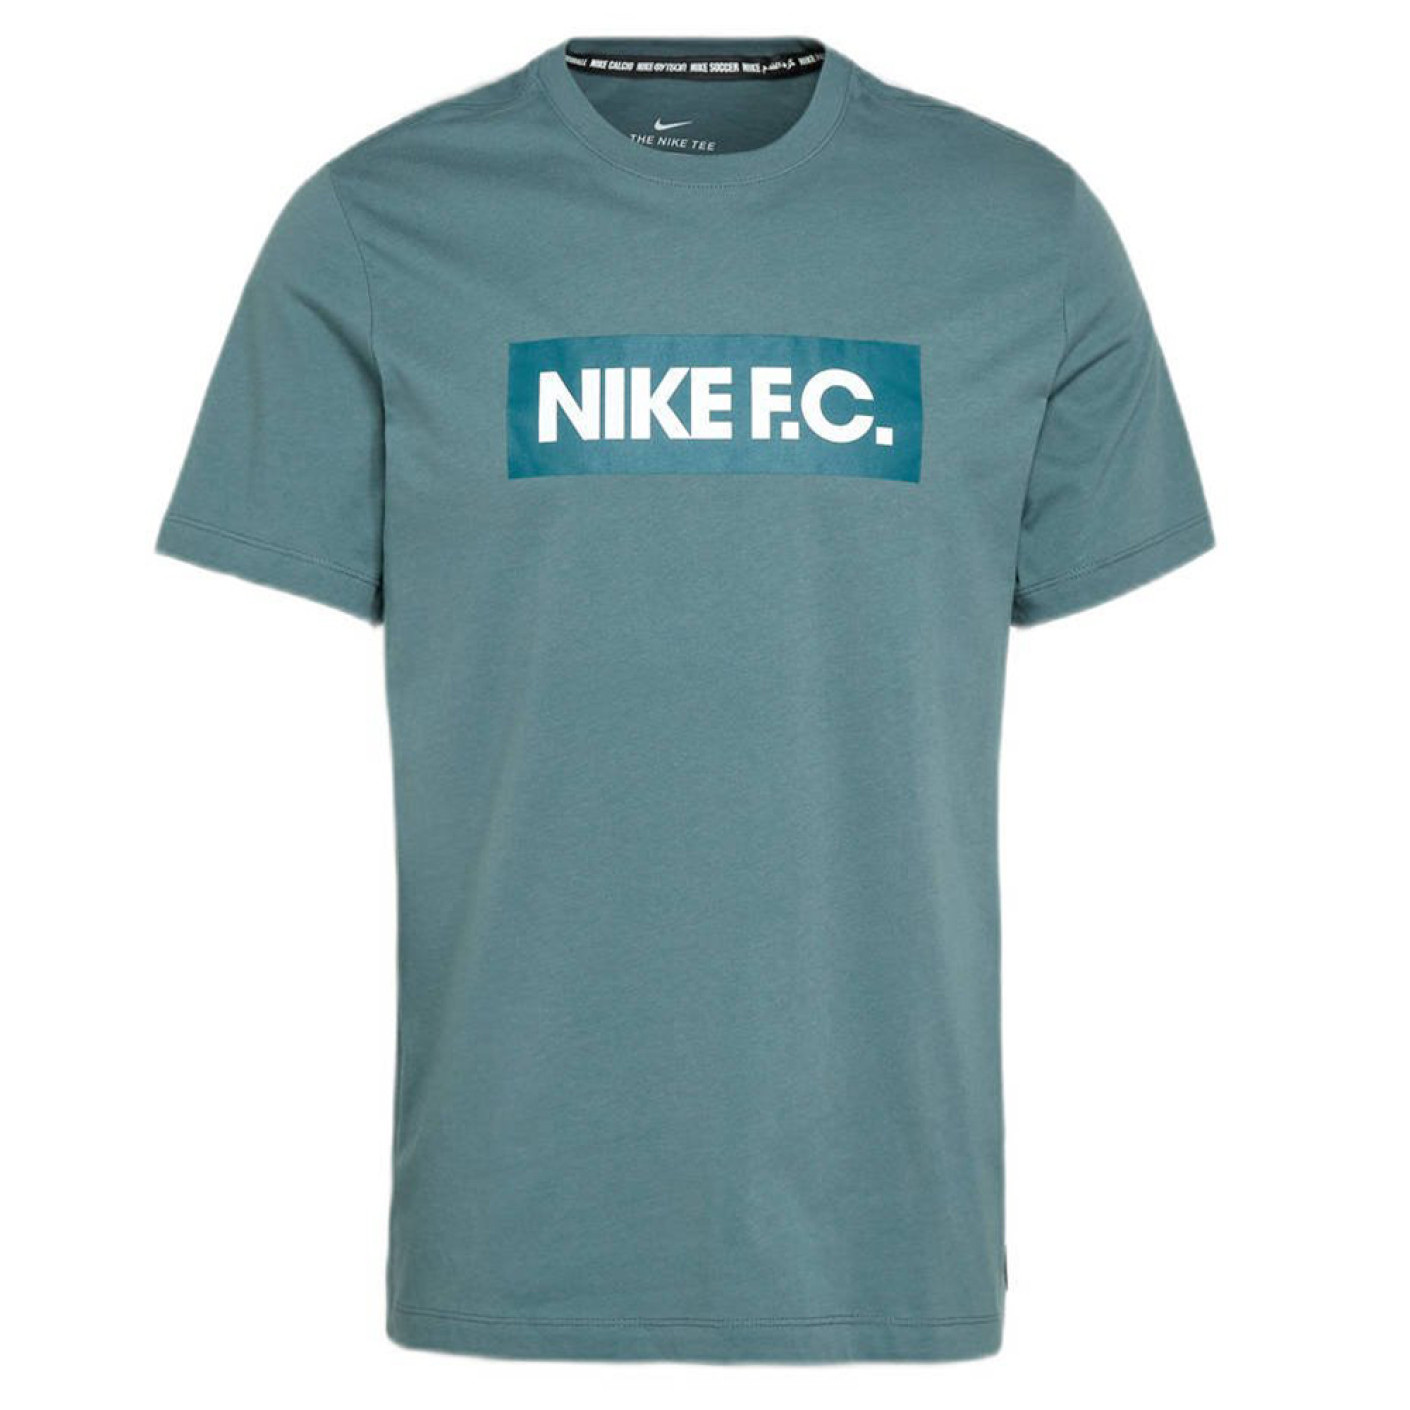 Nike F.C. T-Shirt Donkergroen